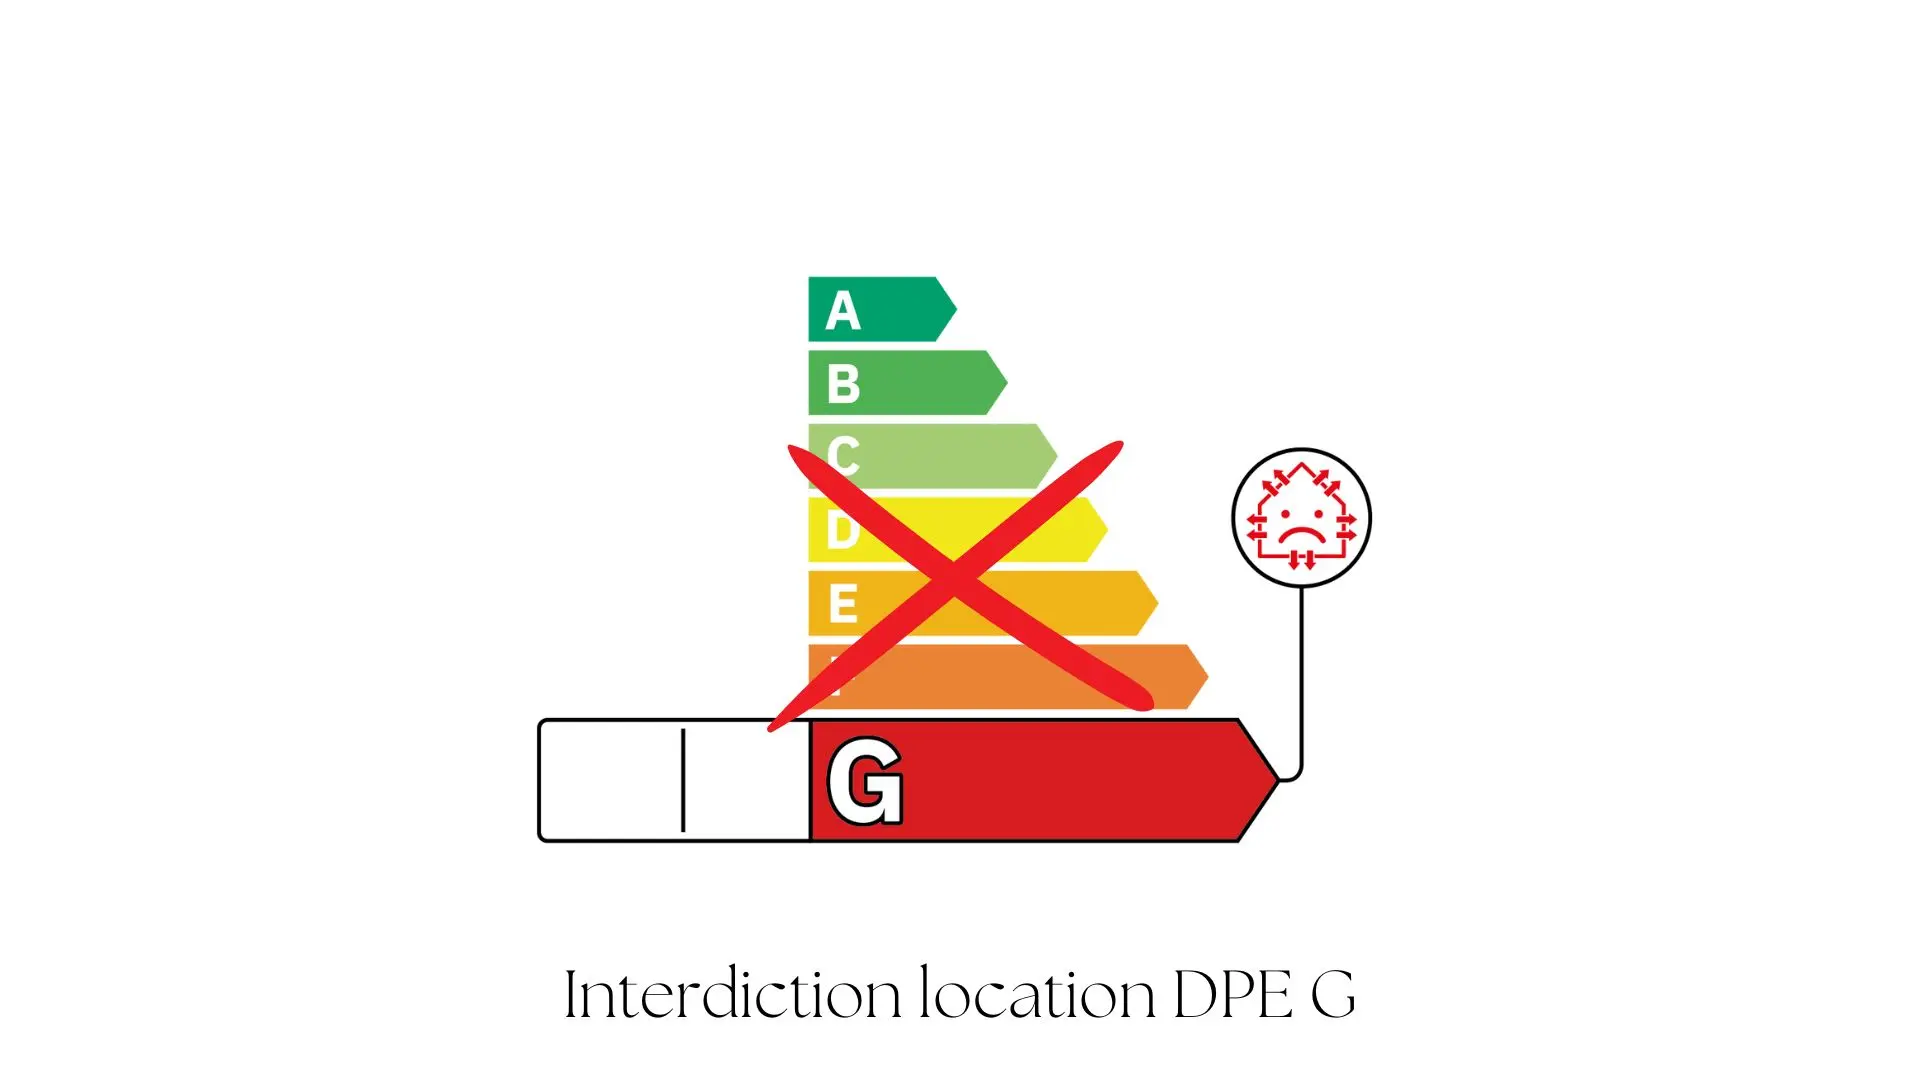 Interdiction location DPE G